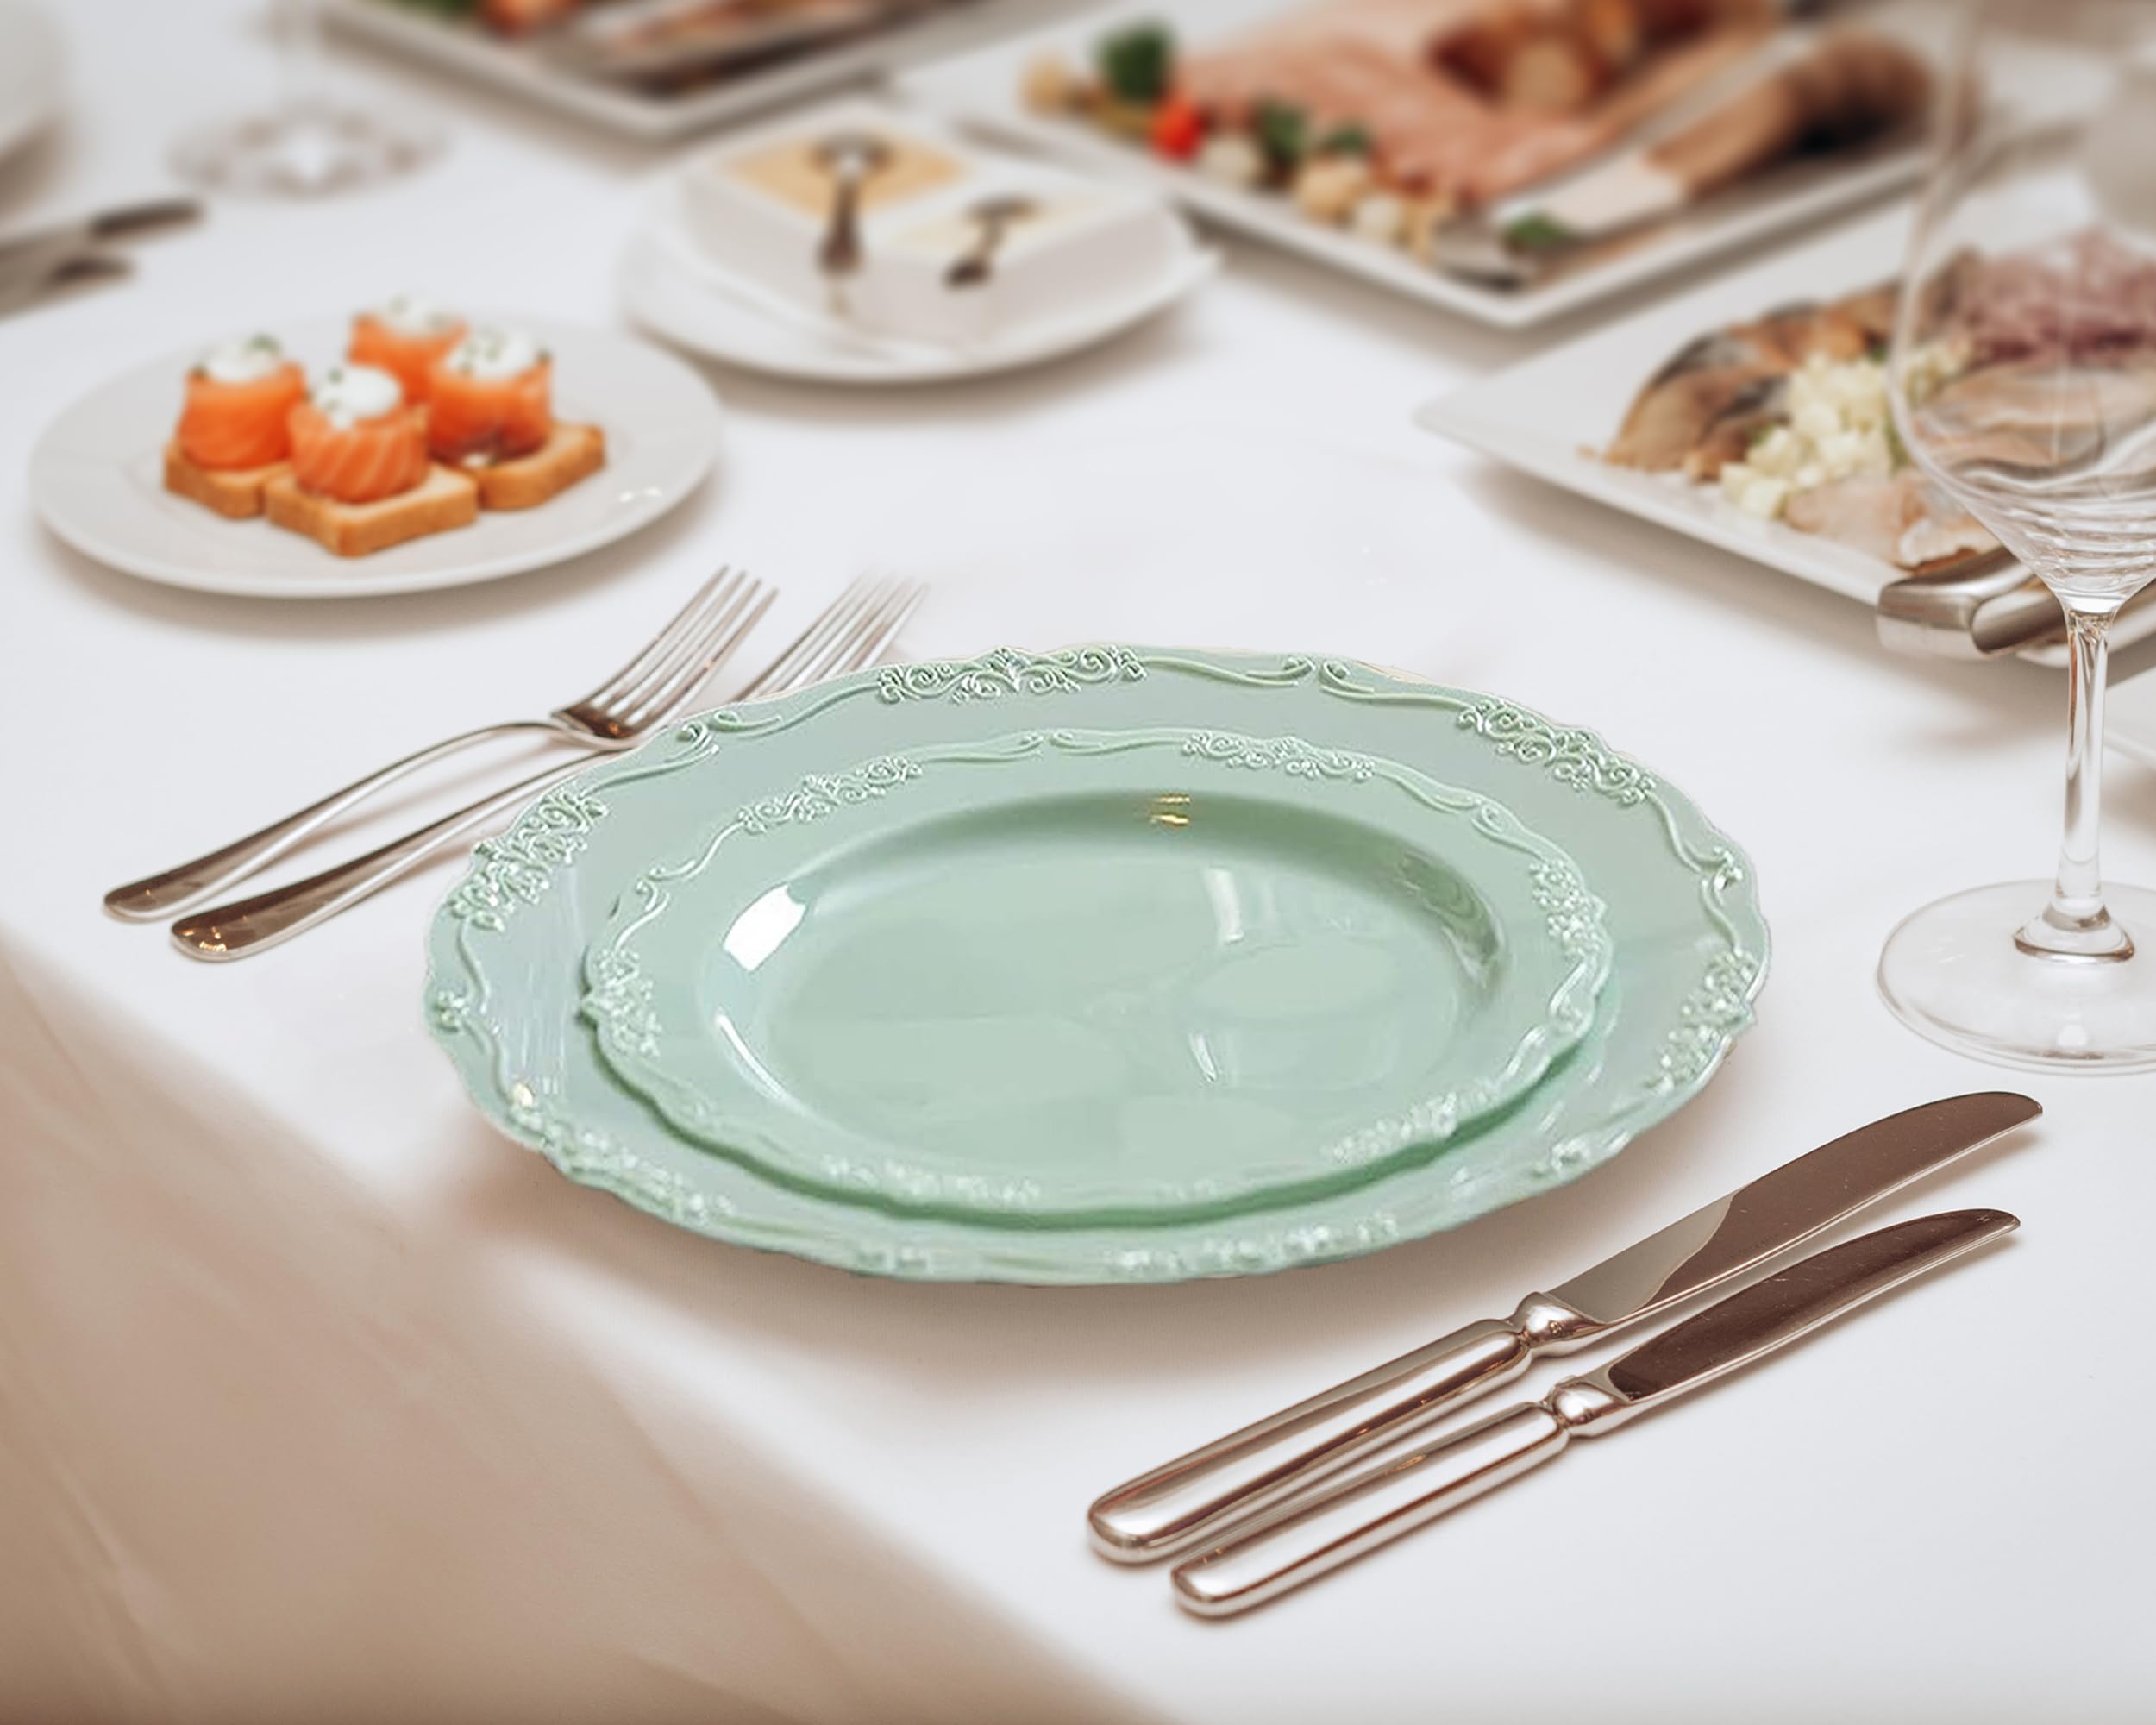 Posh Setting Disposable Plastic Plates Set, Vintage Party Plates, Light Green/Sage 60 Pack (30 Guest) 30 x 10.25 Dinner & 30 x 7.25 Salad/Dessert Plate